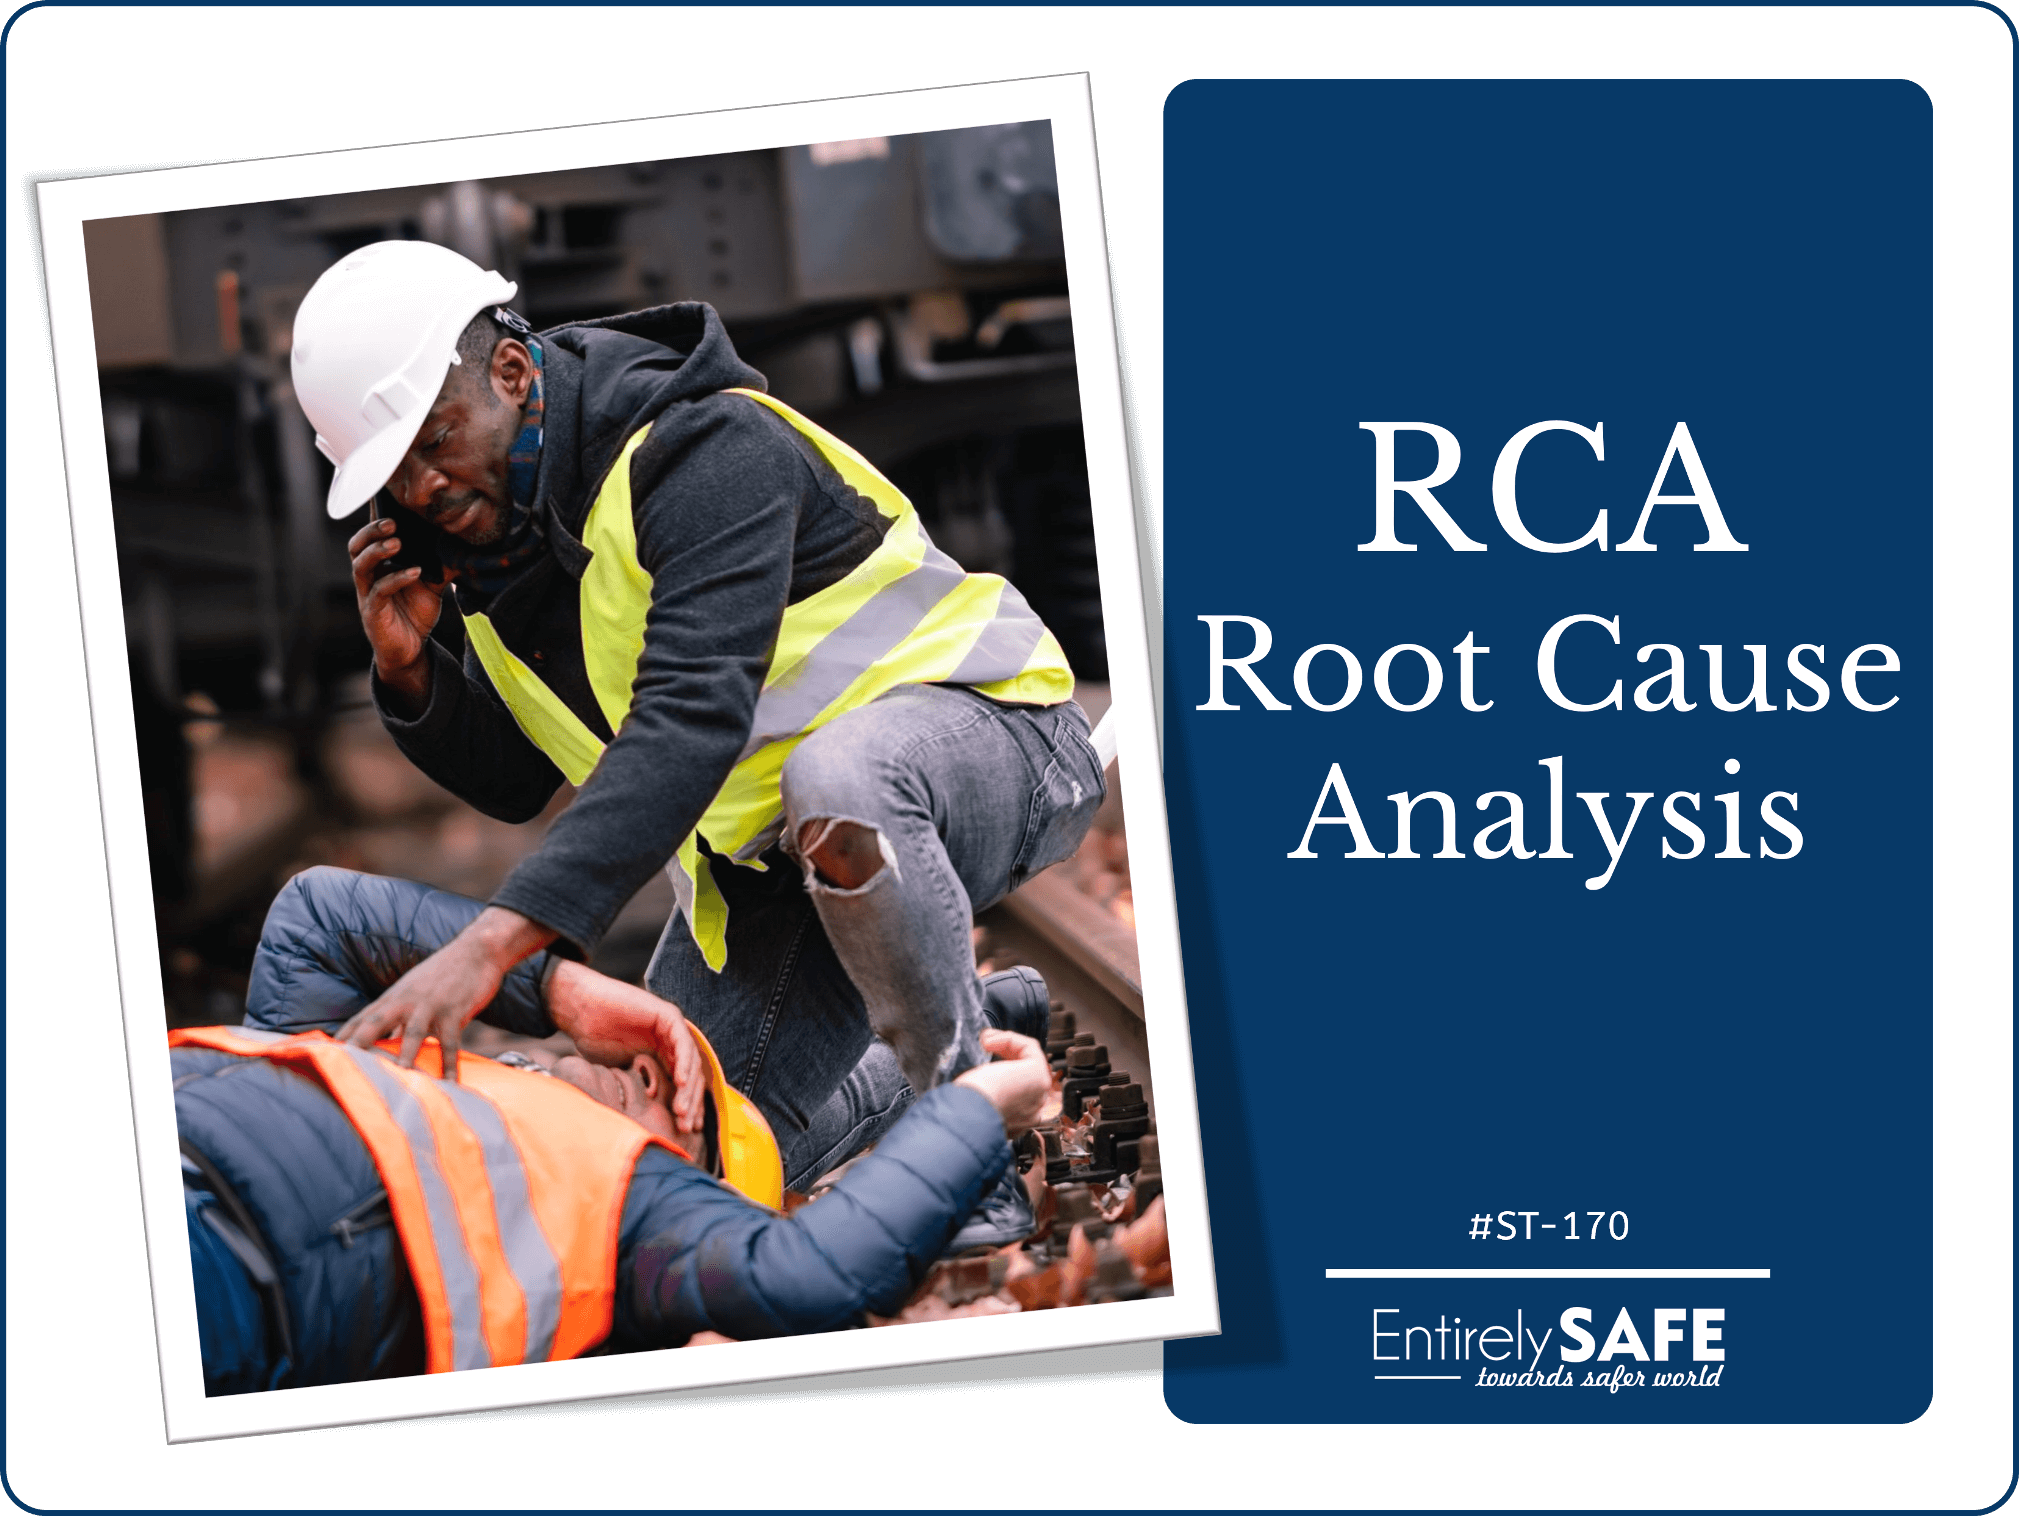 ST-170-Root-Cause-Analysis-RCA-2 (1)